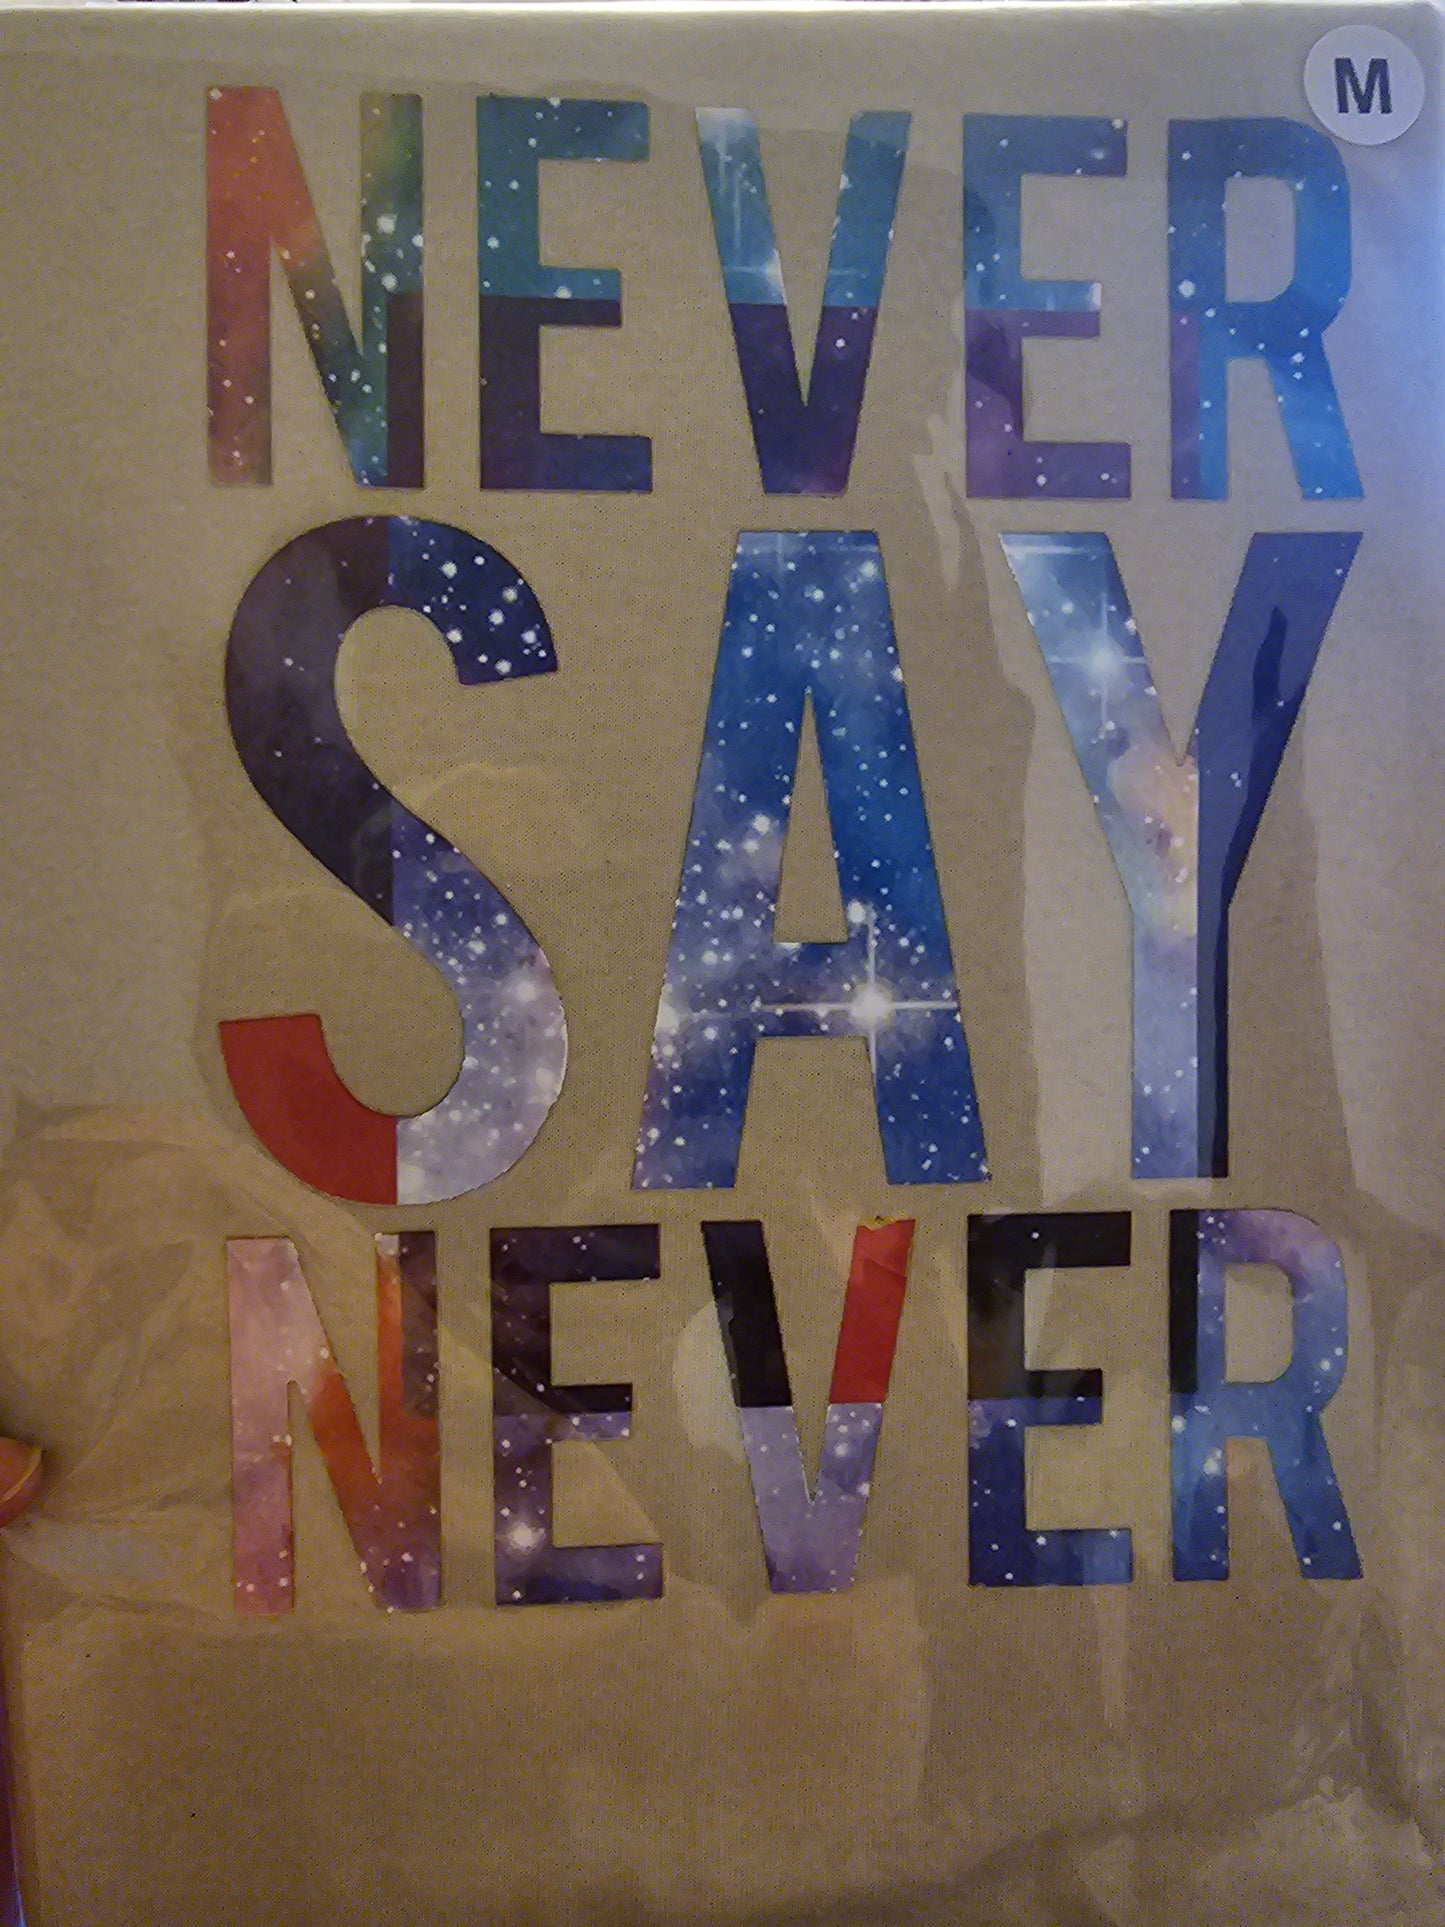 Never Say Never Handmade Graphic T Shirt